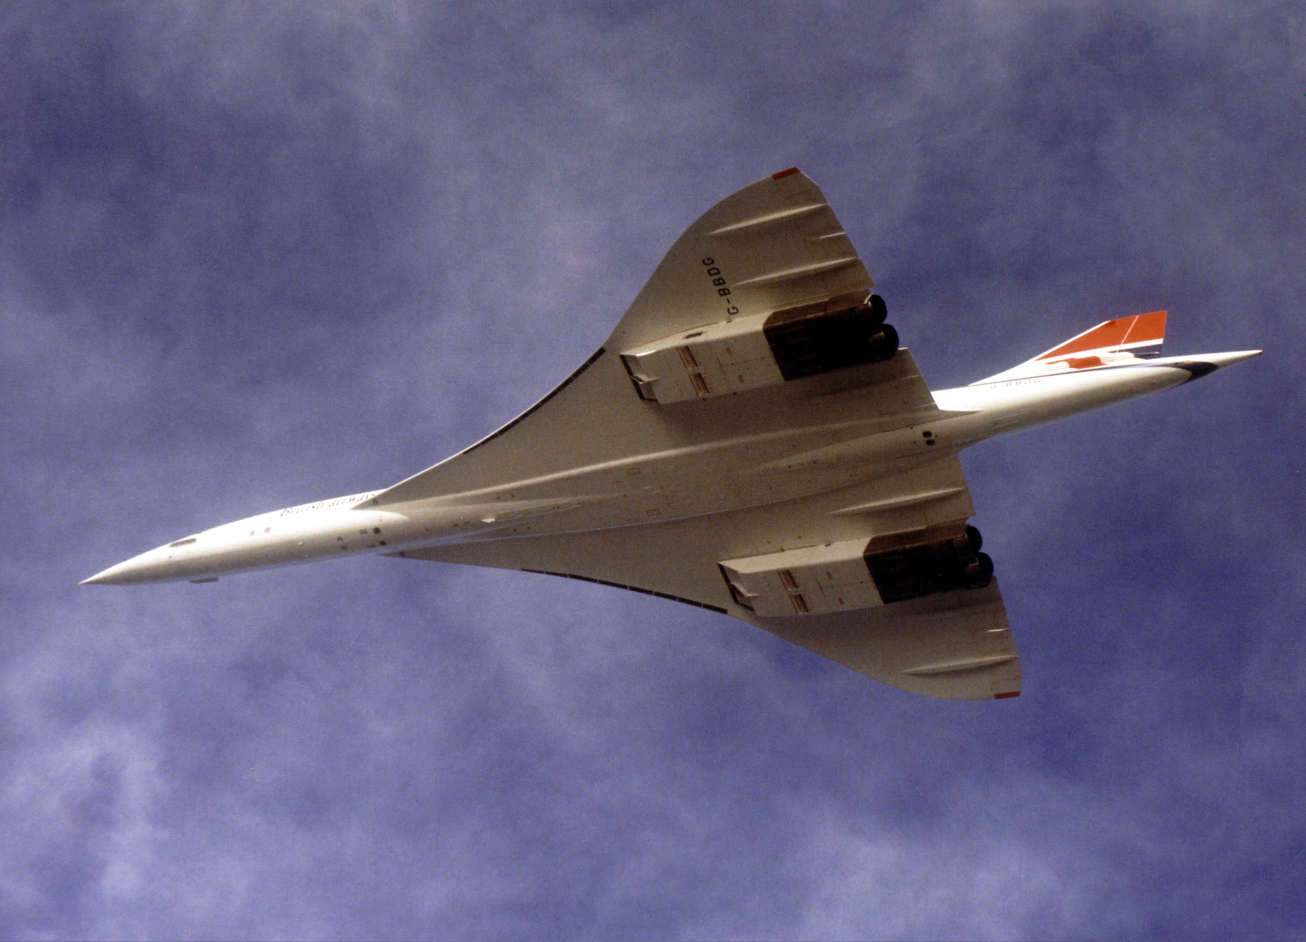 Concorde talk at Brooklands Museum Weybridge - Royal Aeronautical Society